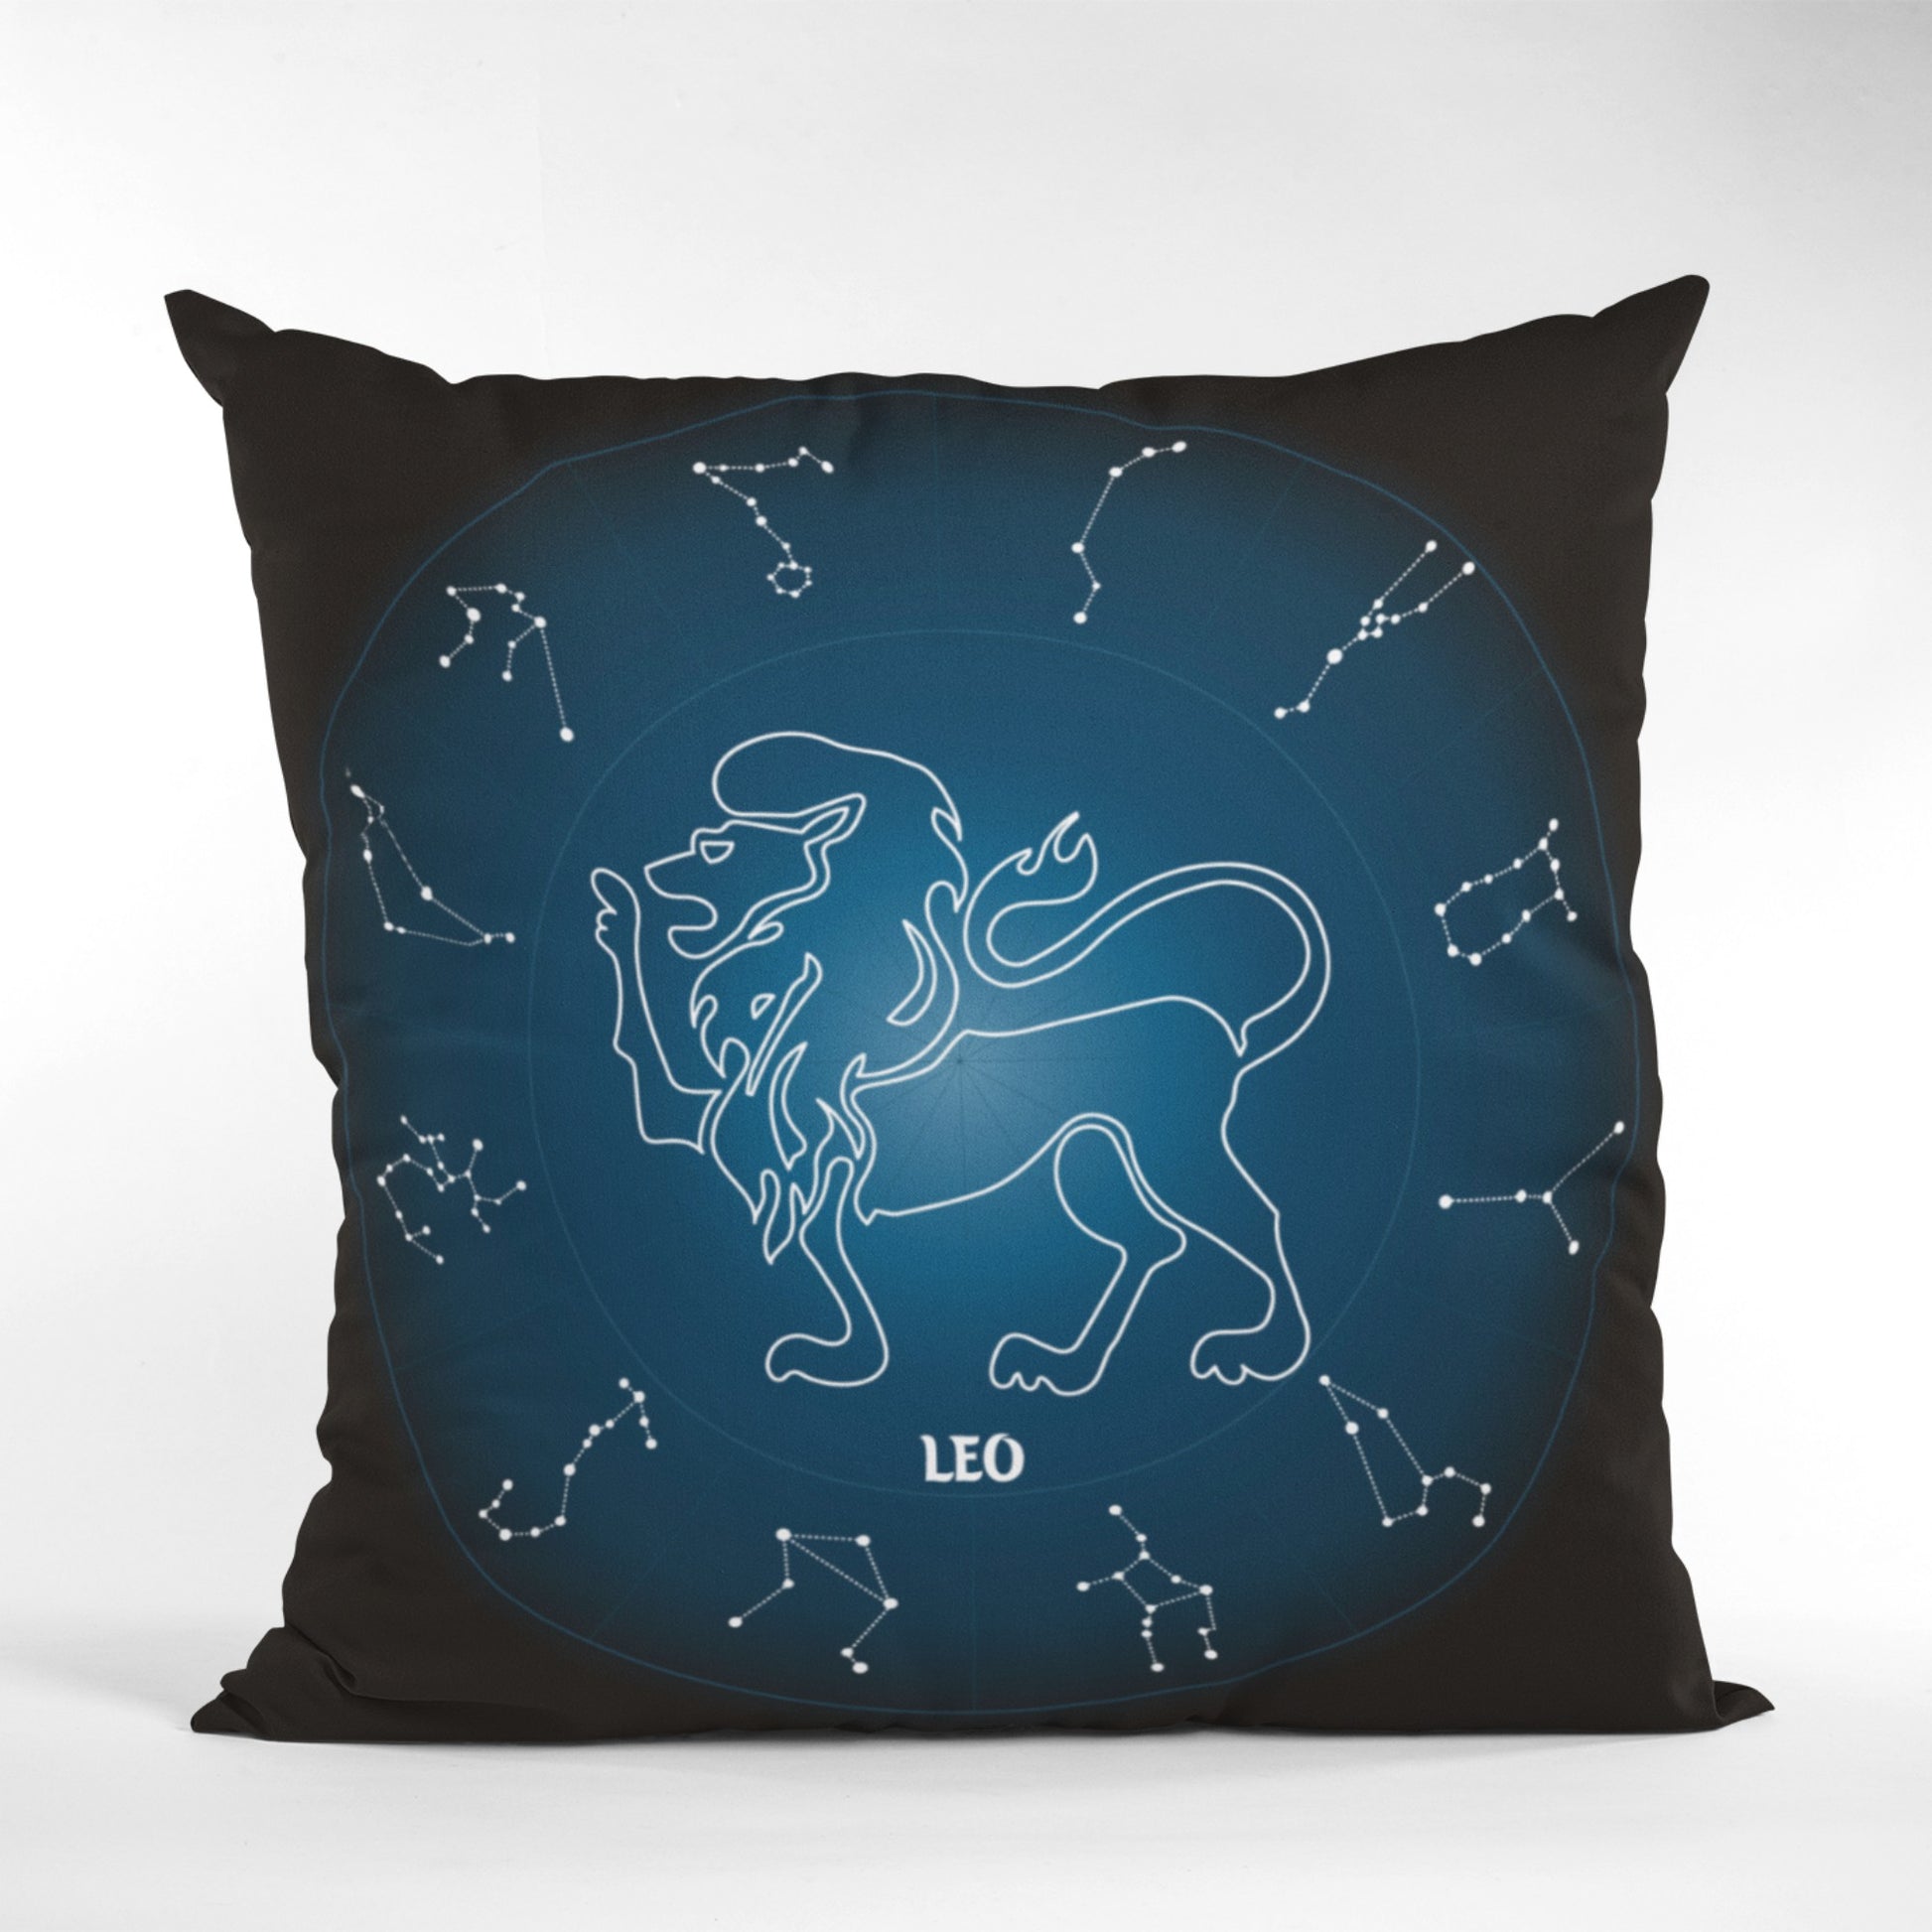 Leo Horoscope Cushion Cover